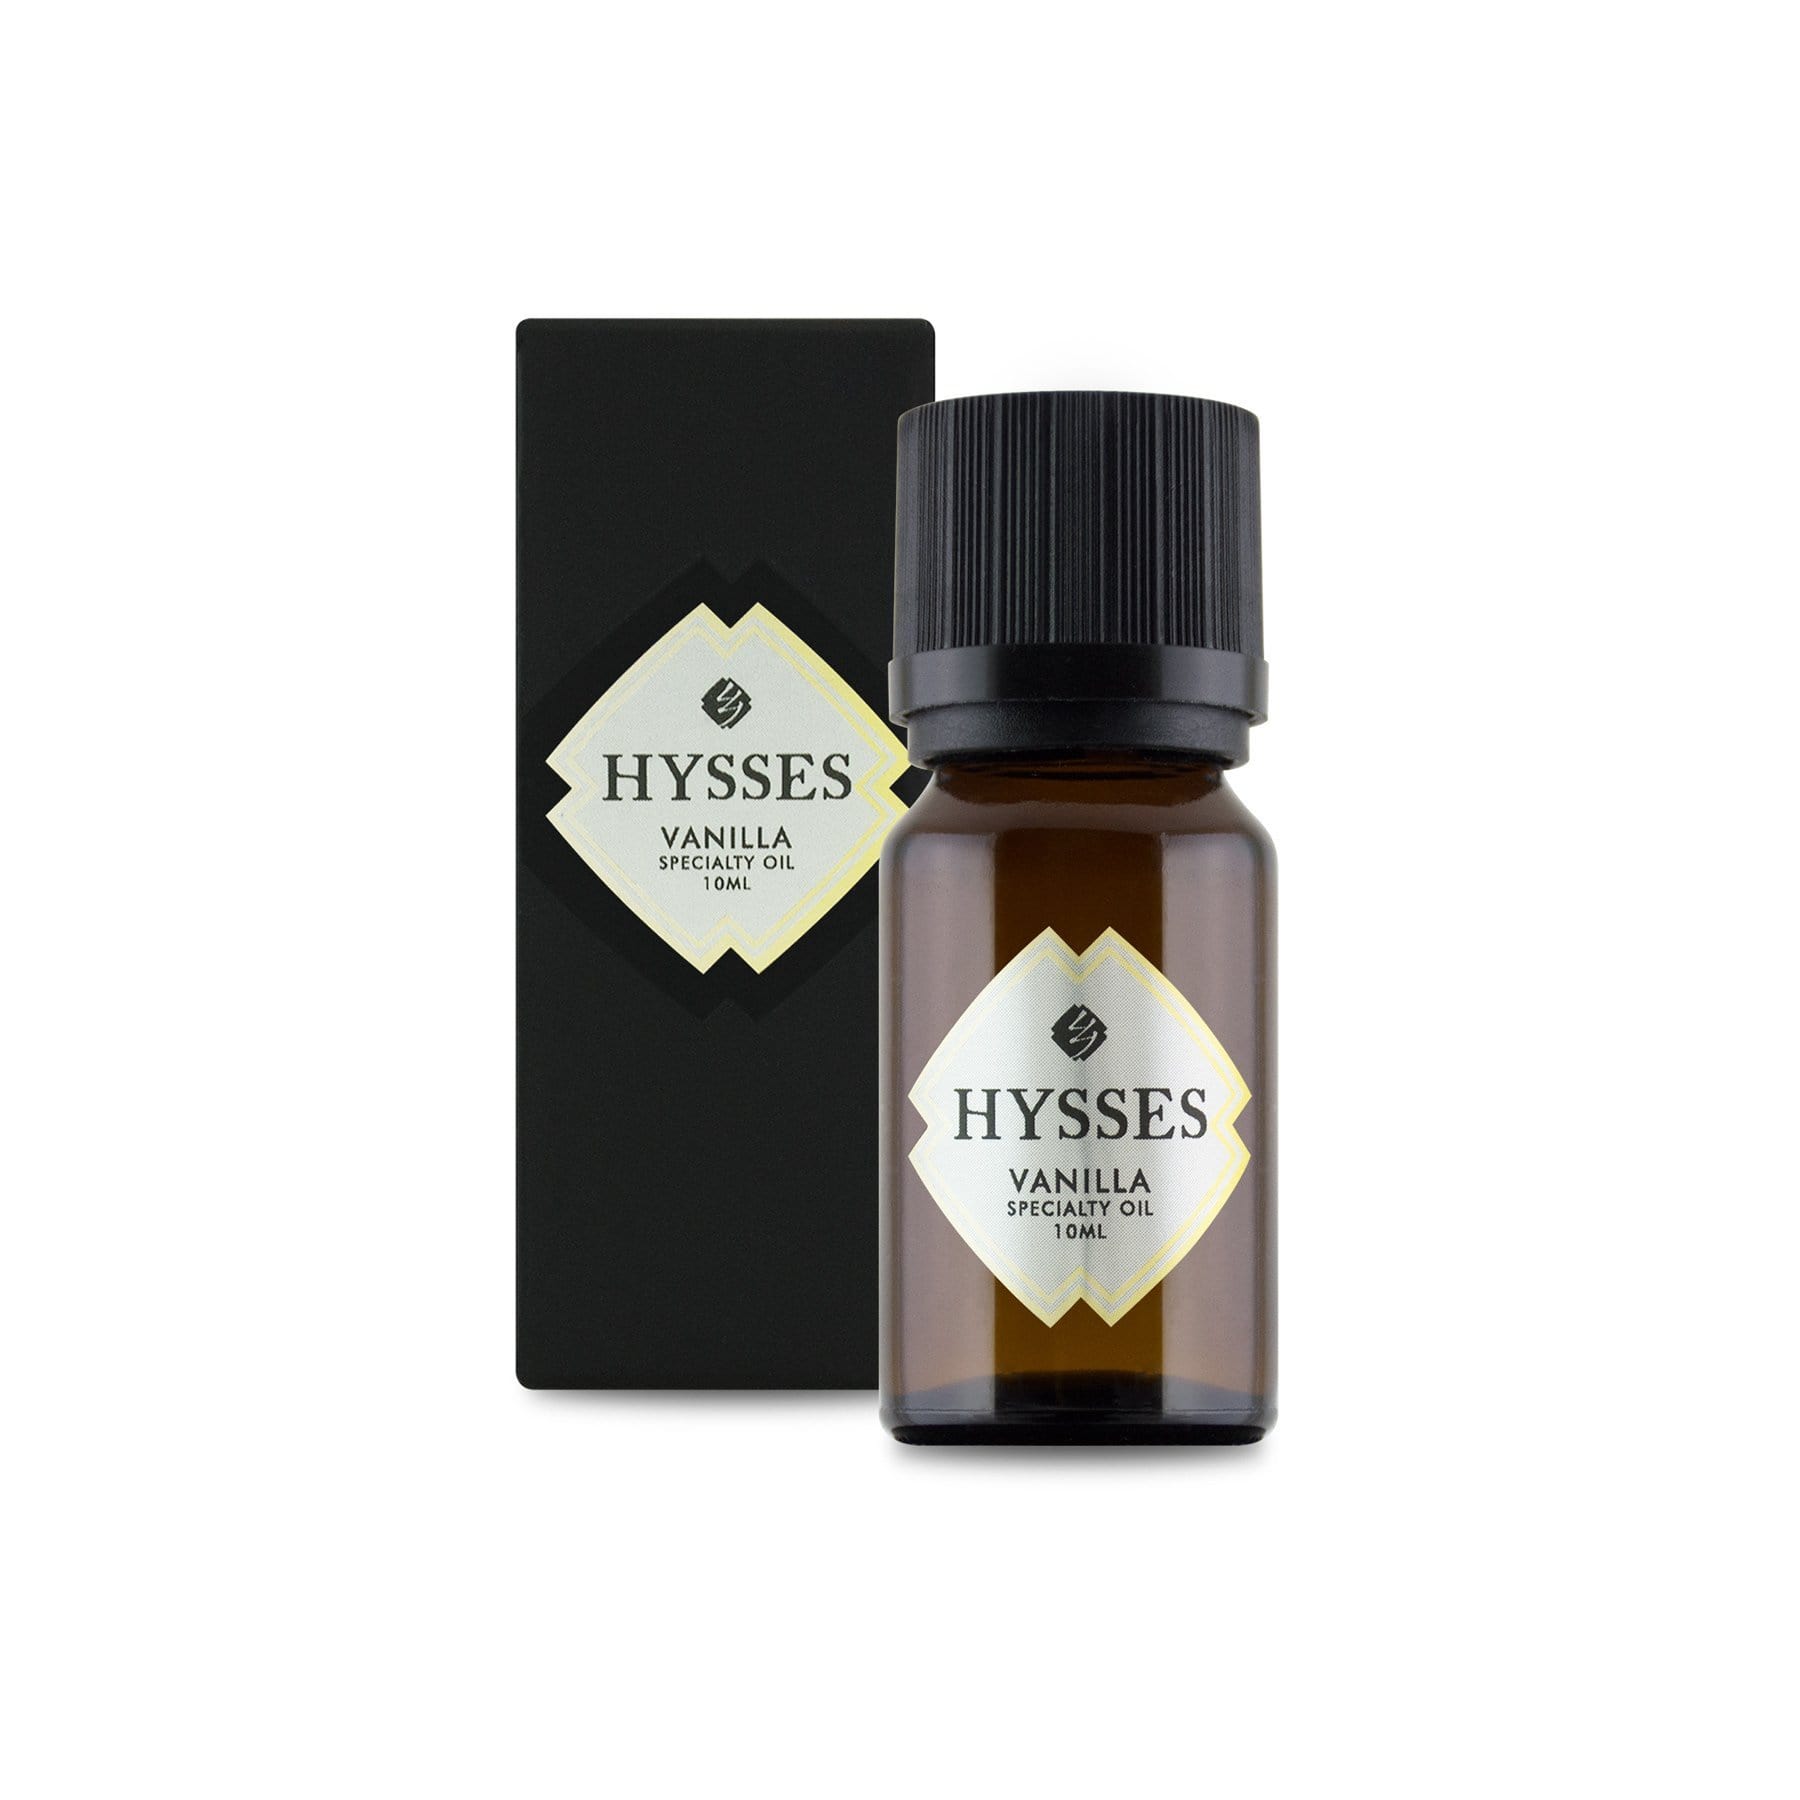 Hysses Essential Oil Jojoba Oil / 10ml Specialty Oil Vanilla Absolute (30%)